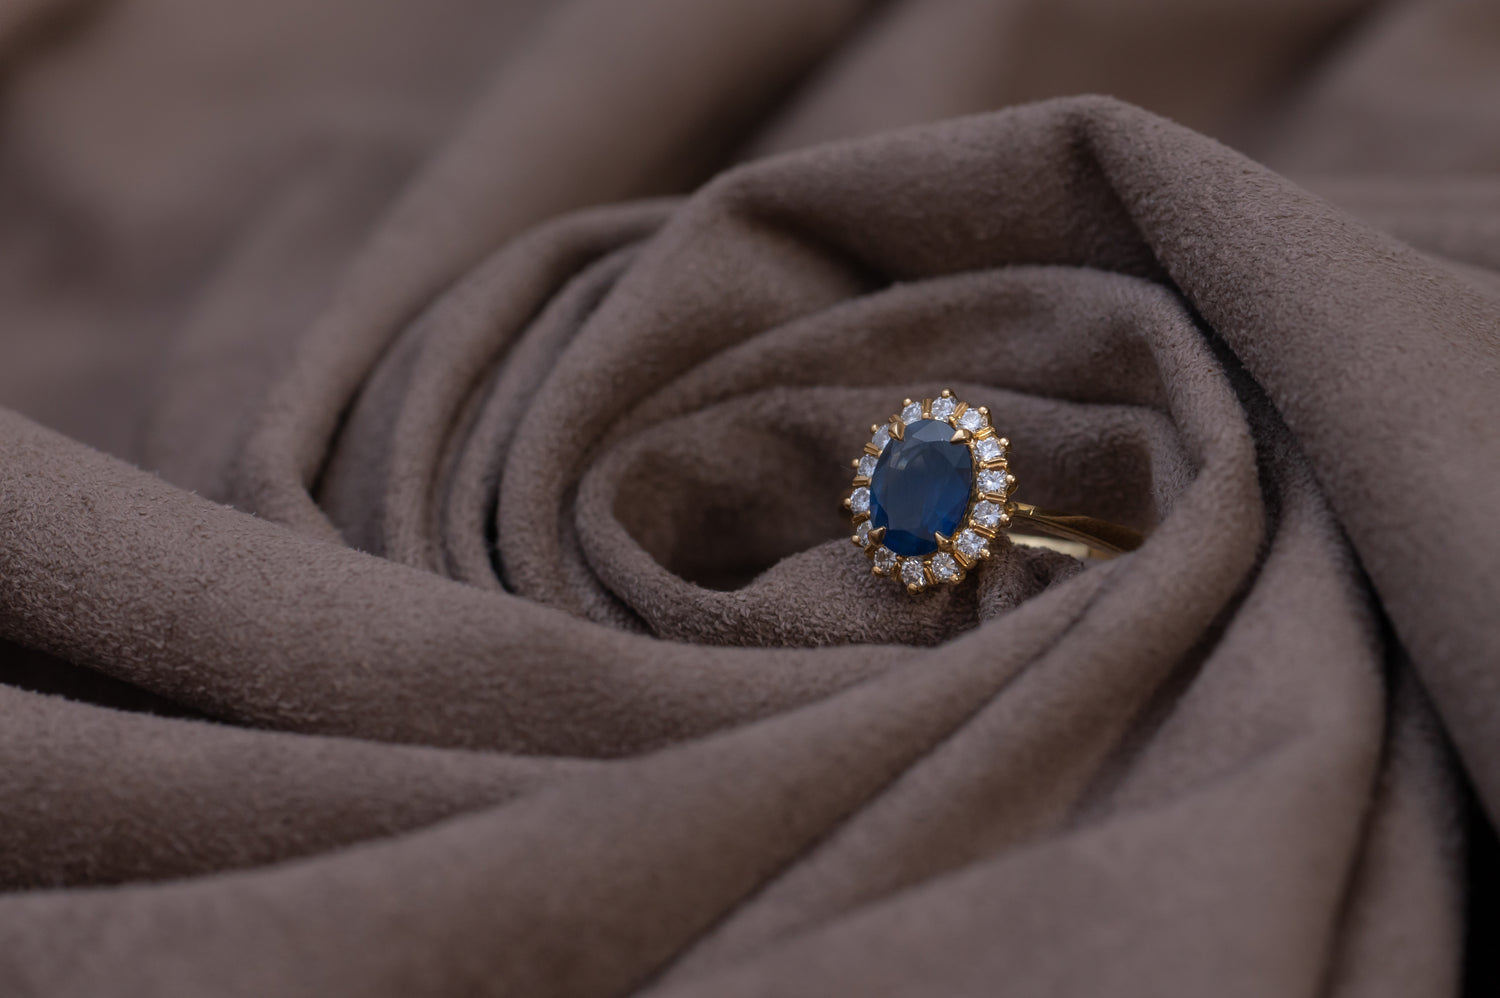 A Blue sapphire (neelam stone) ring